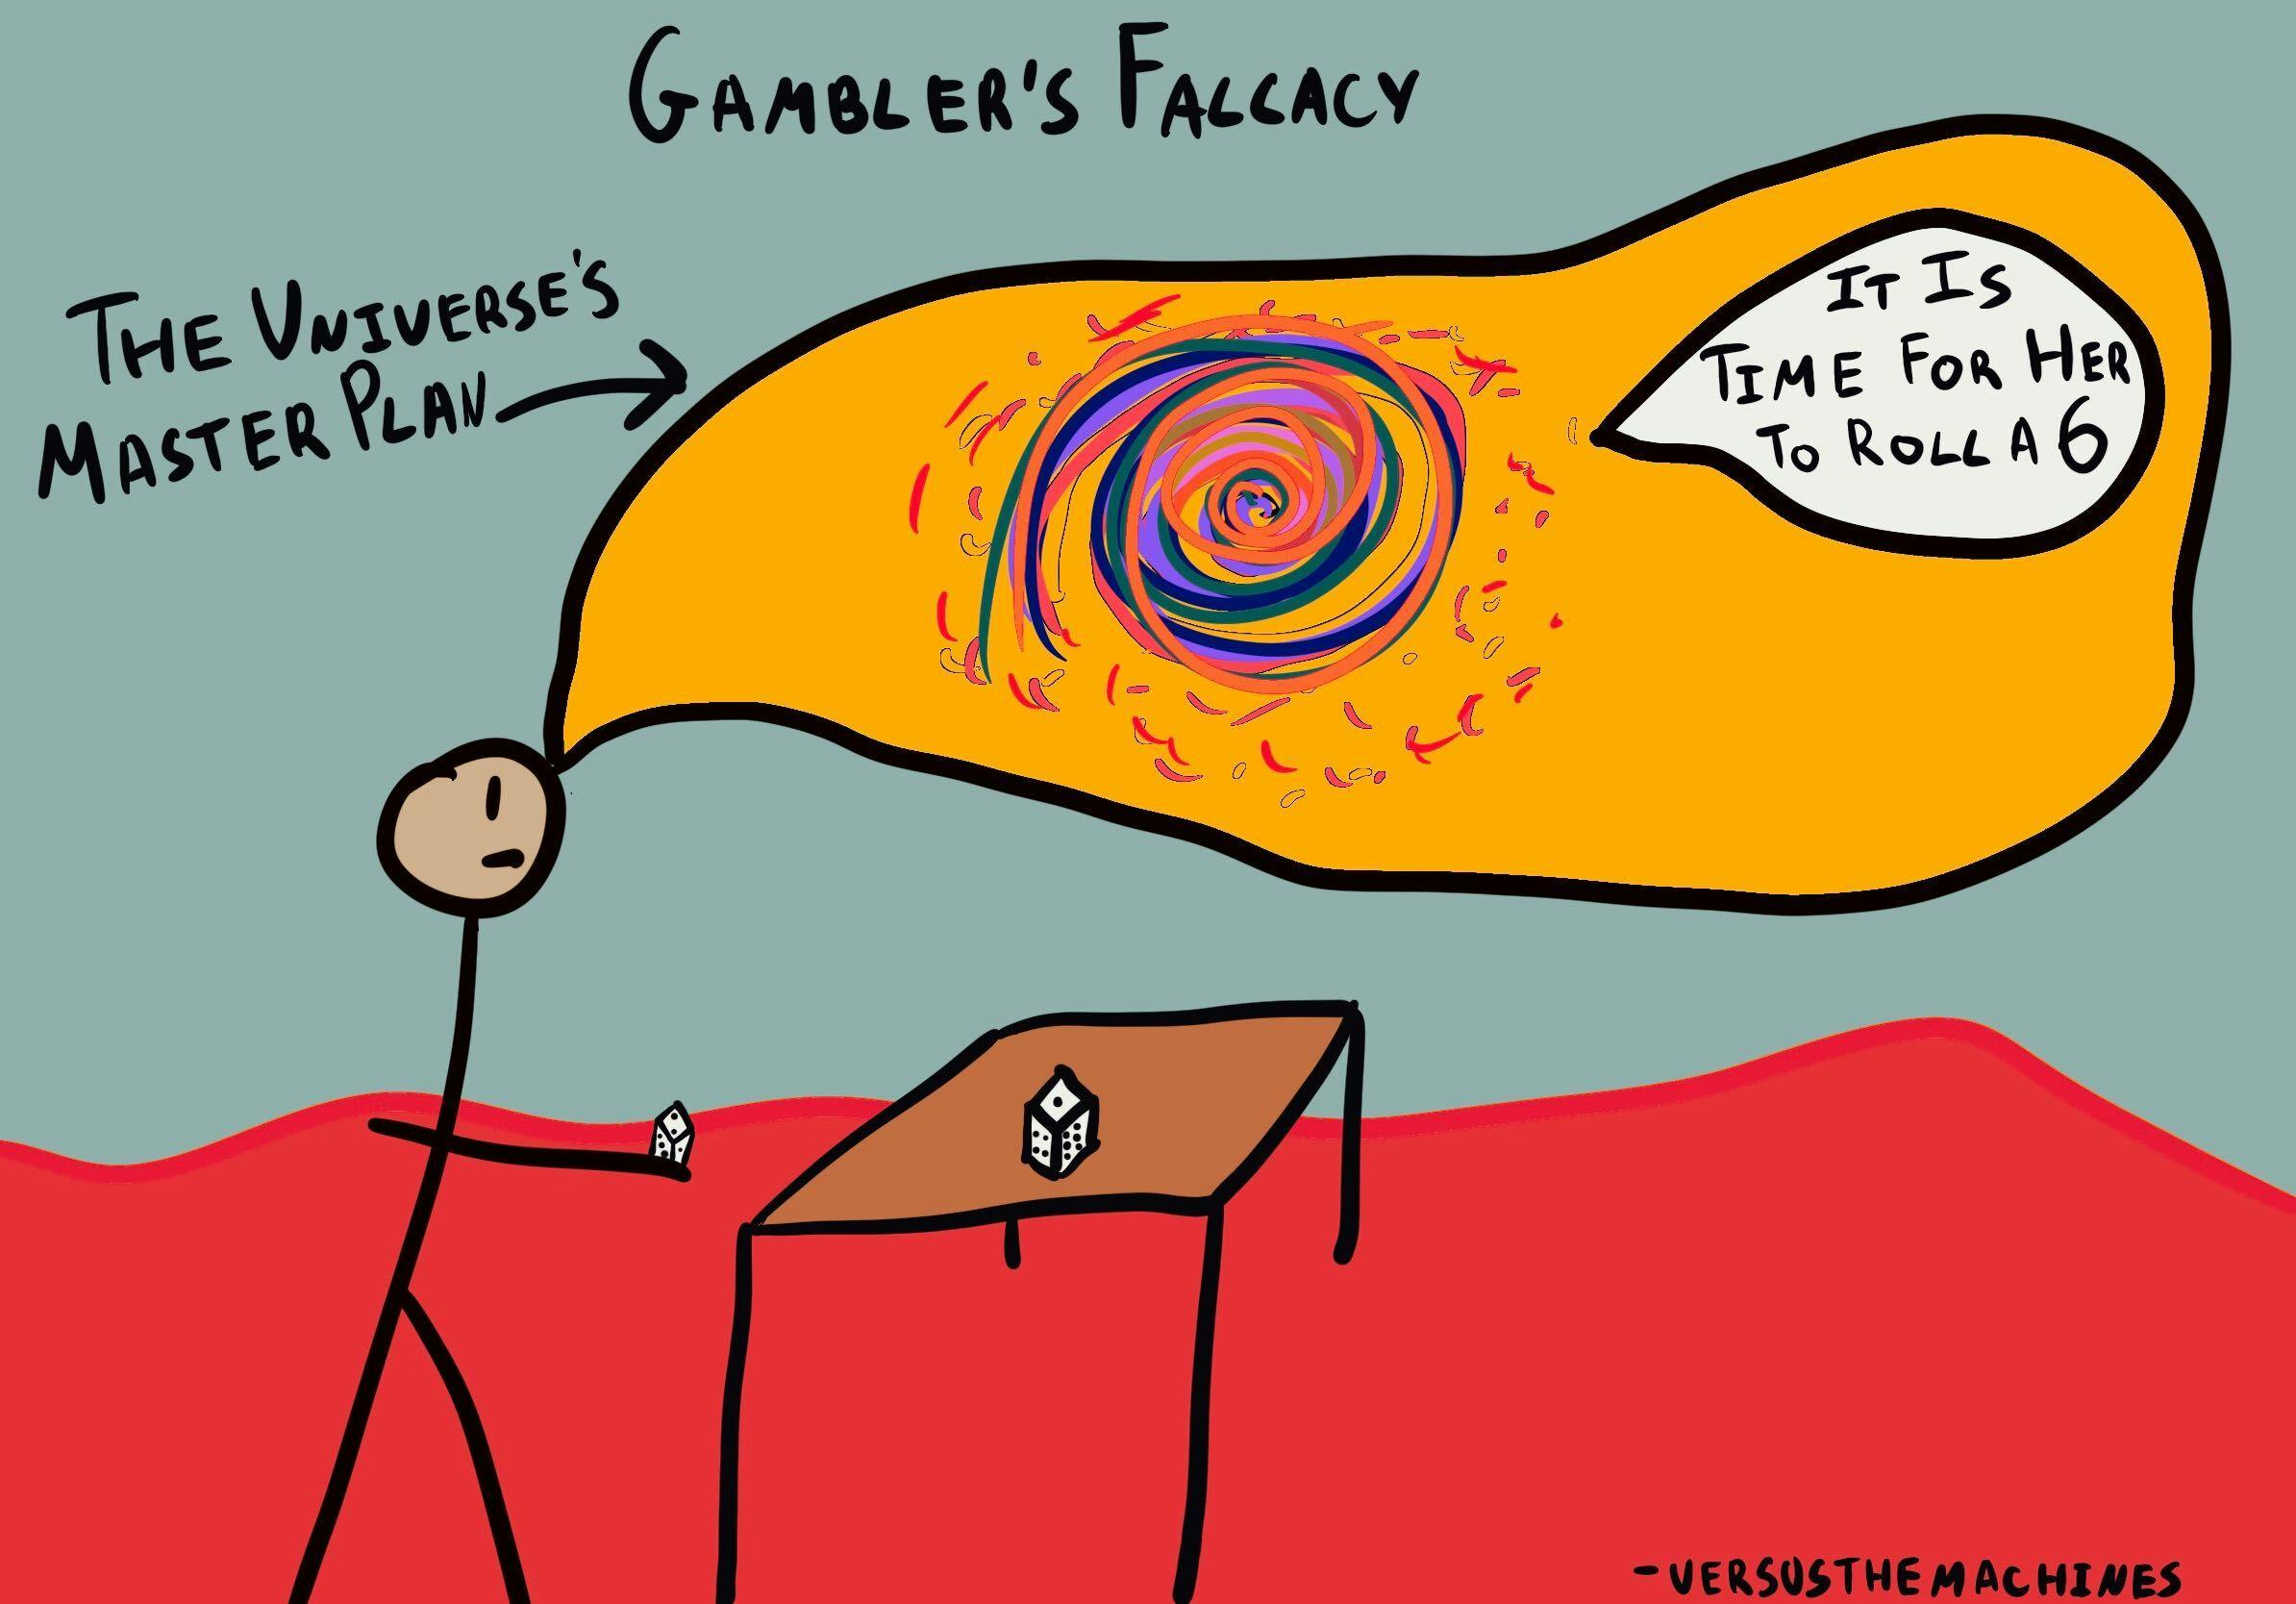 Gambler's fallacy illustration